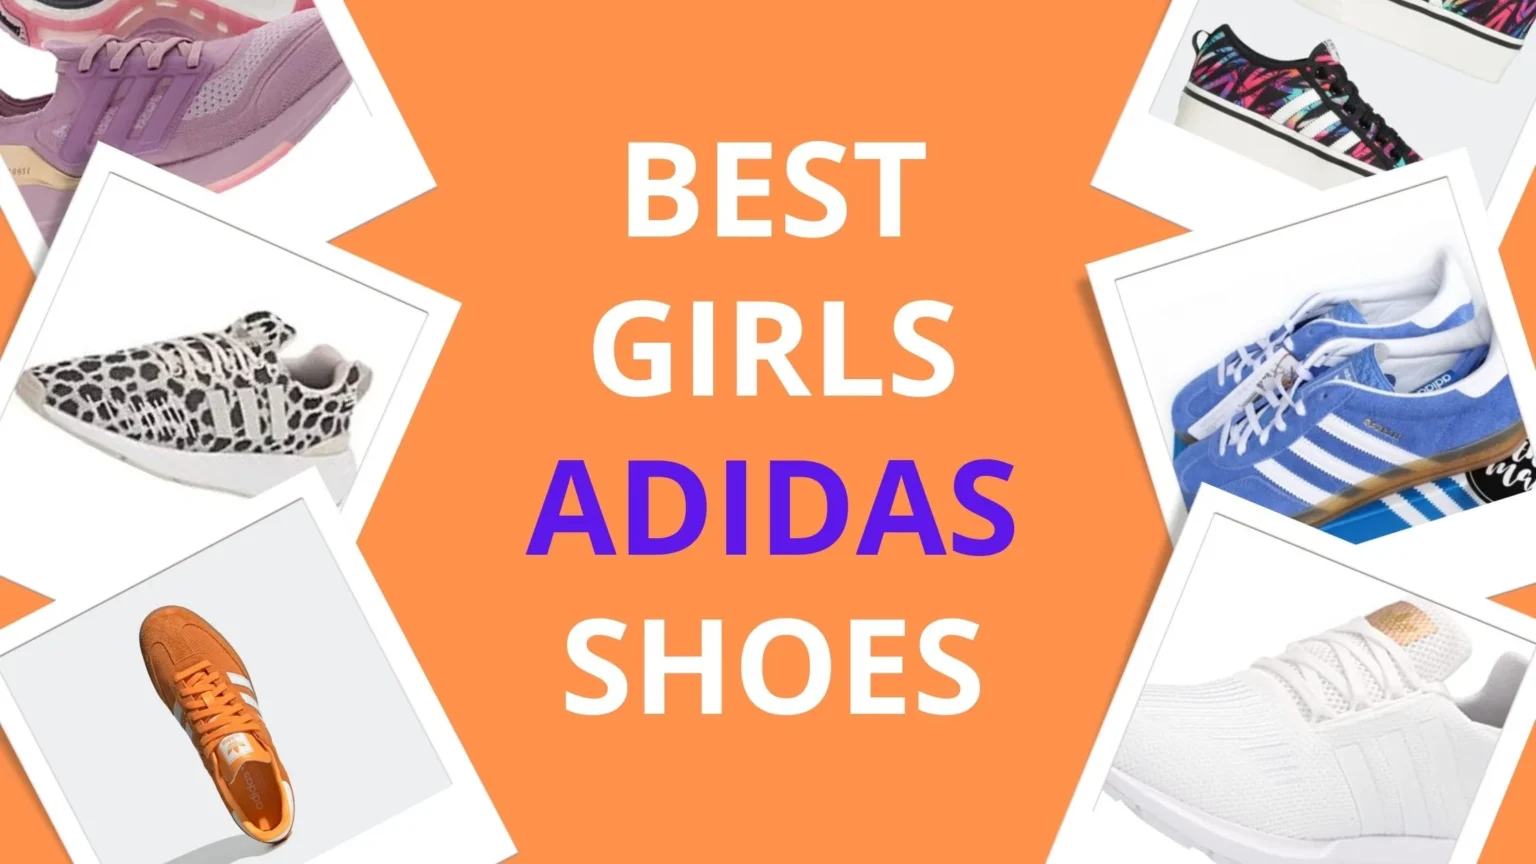 Best girls adidas shoes